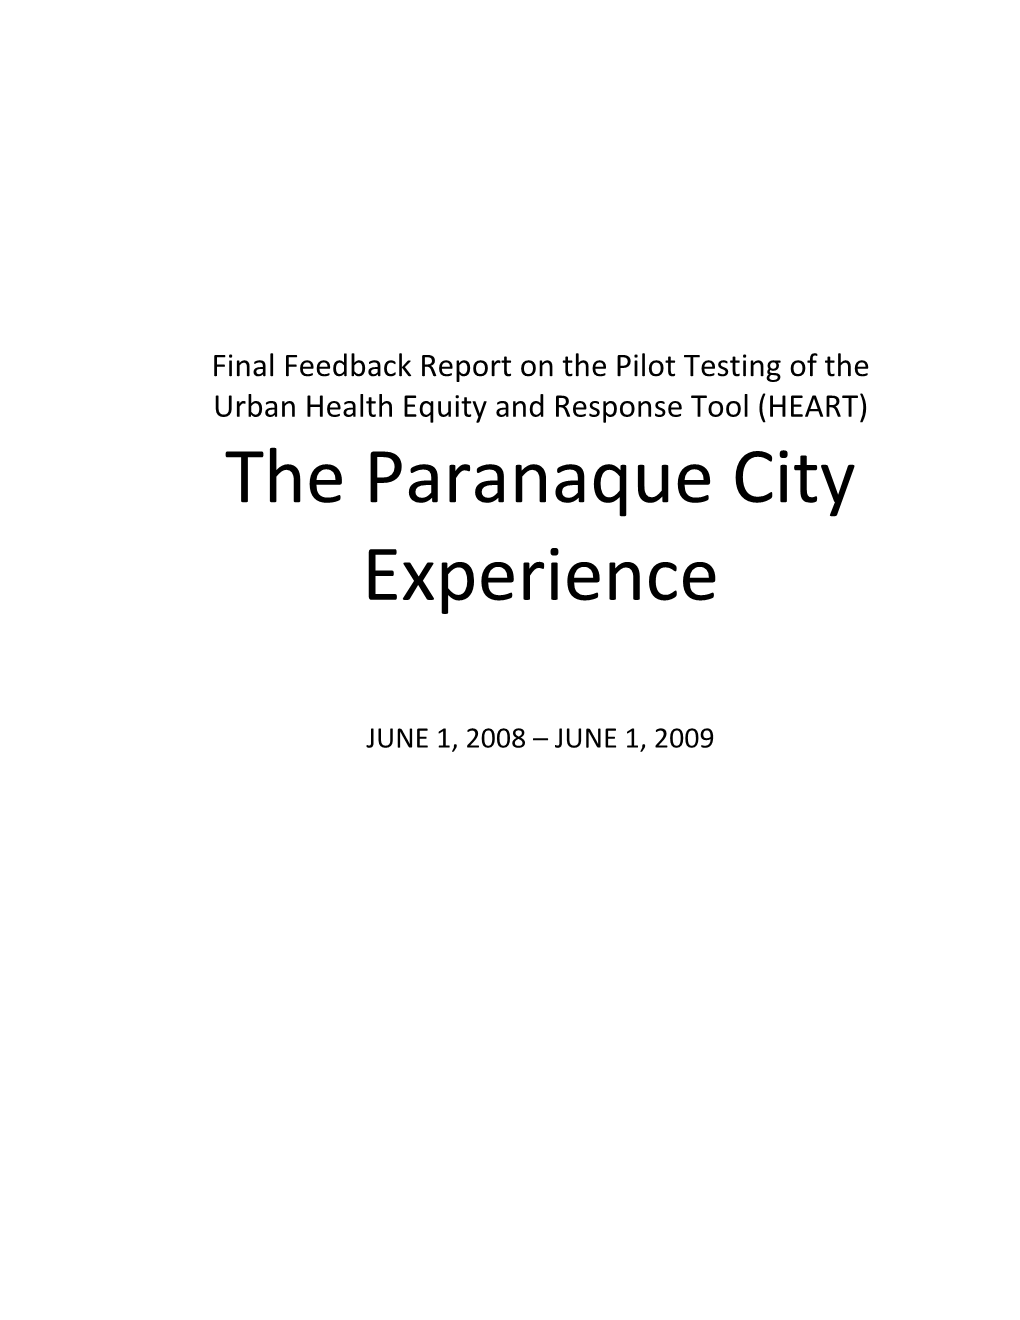 The Paranaque City Experience